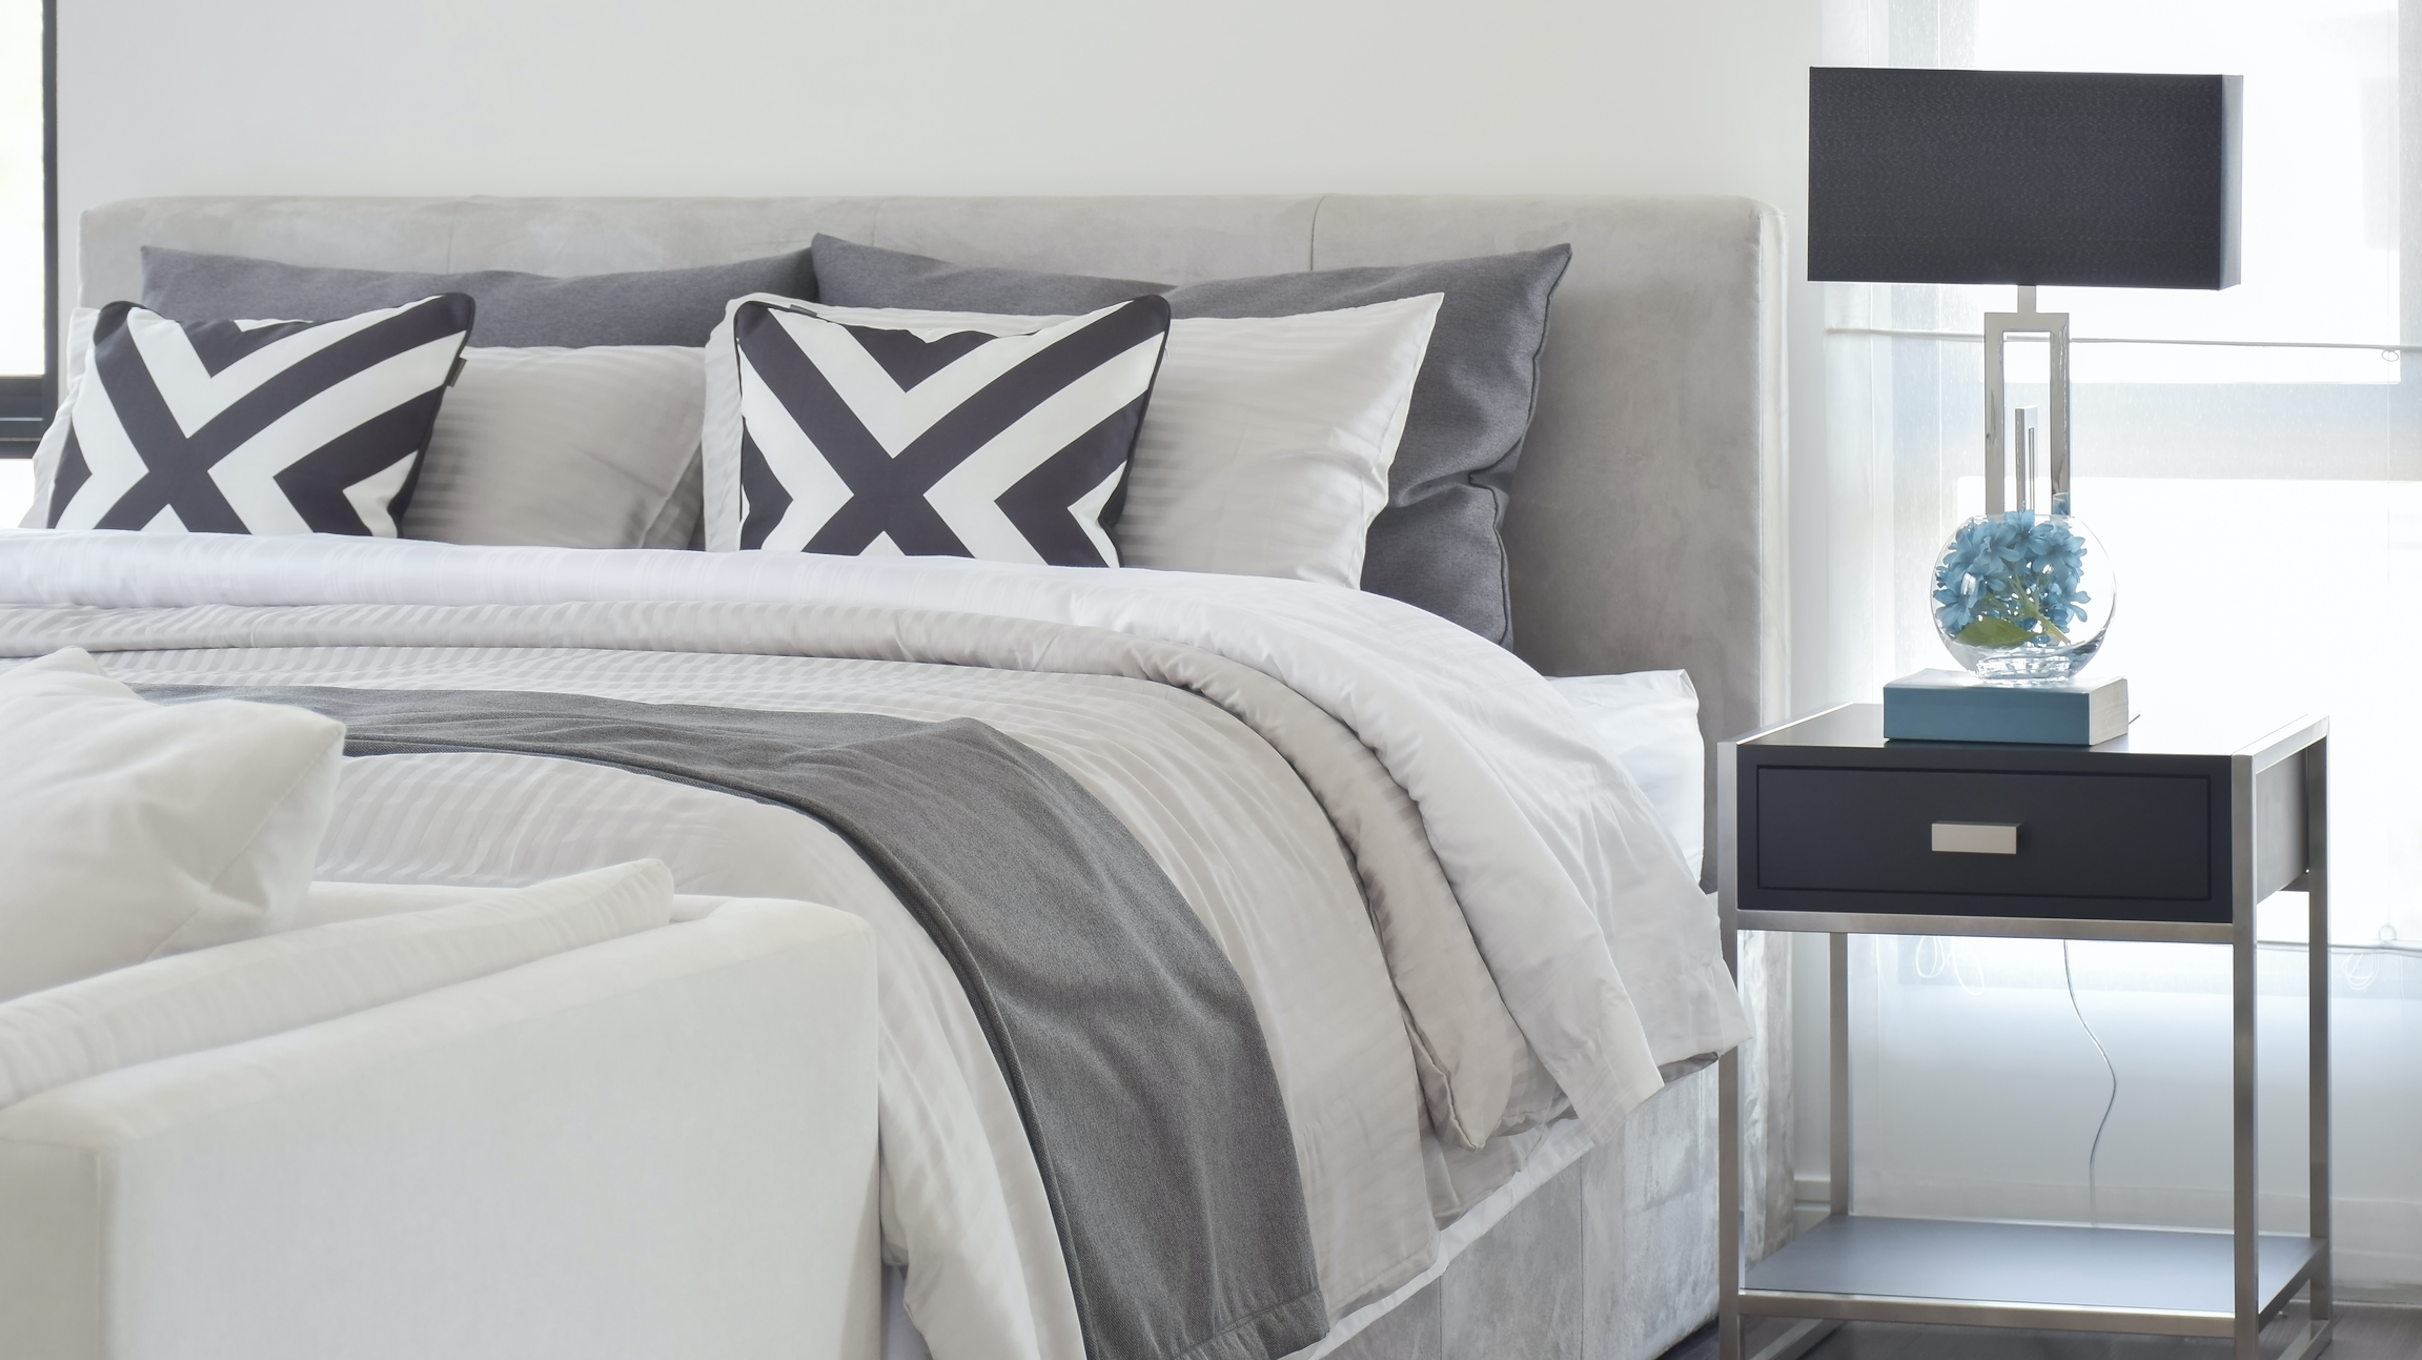 Improve your sleep with custom quality bedding.